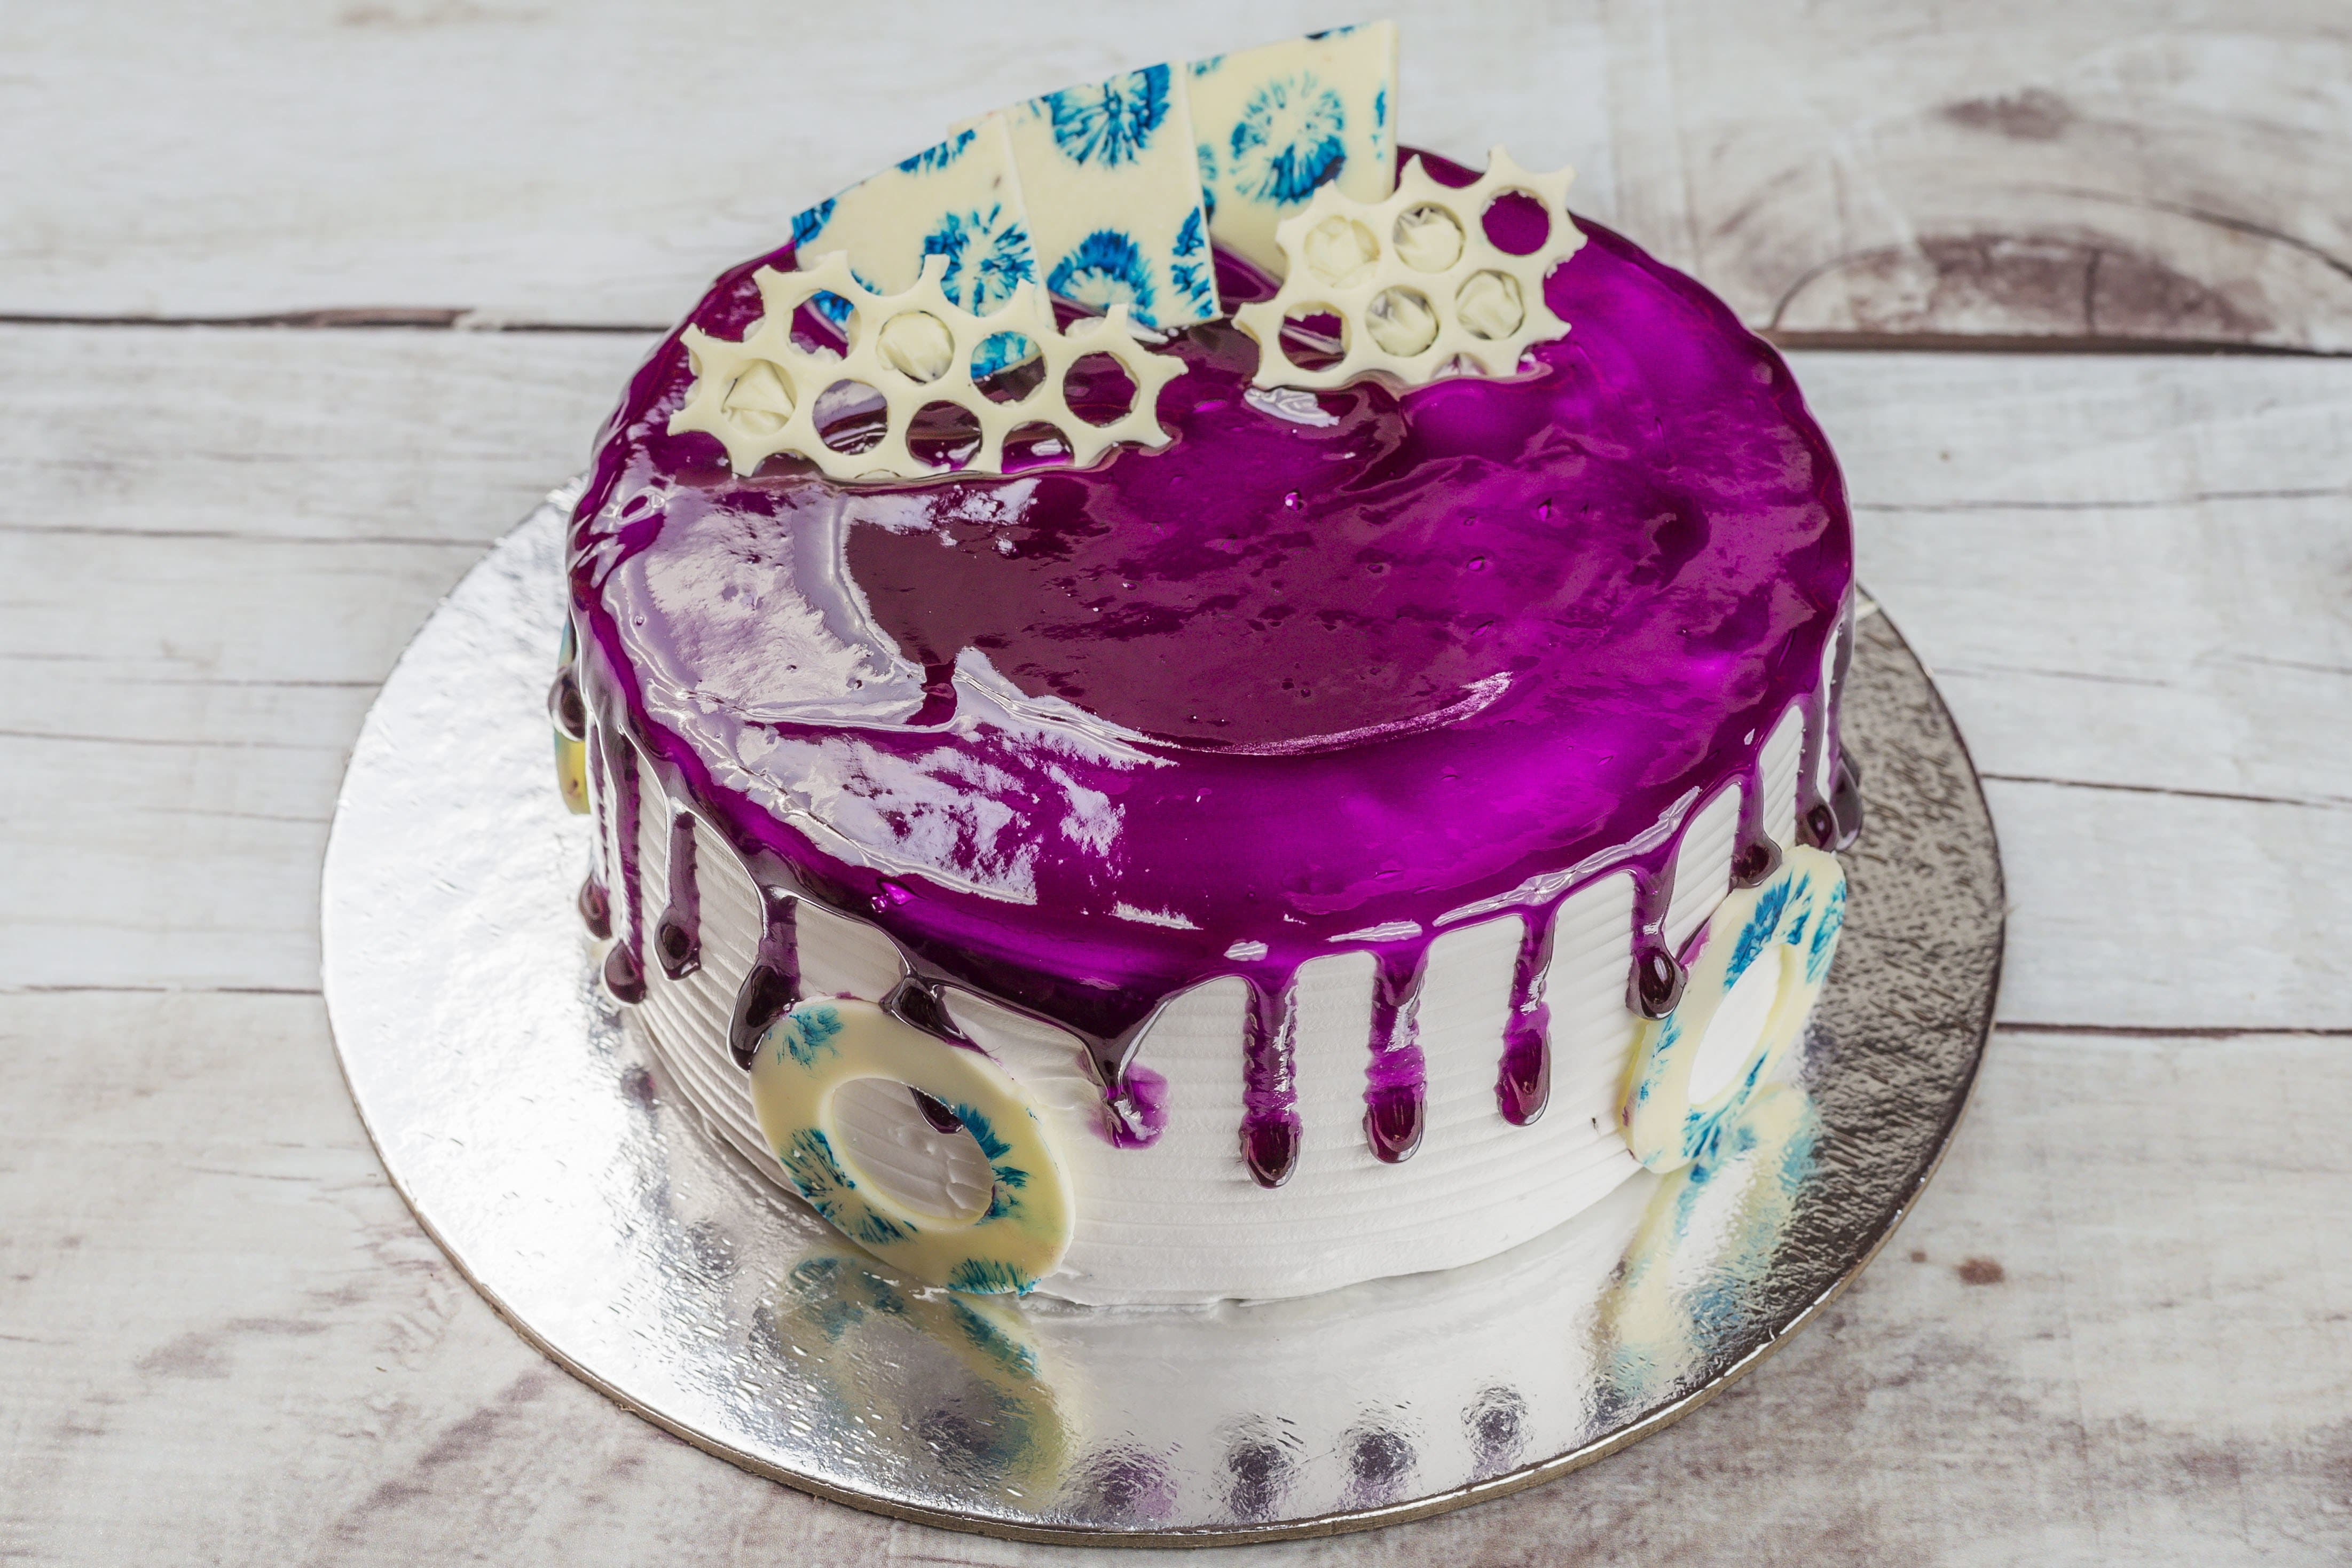 Vancho cake designs. Vancho cake decorating ideas | Cake, Cake decorating,  Cake designs birthday